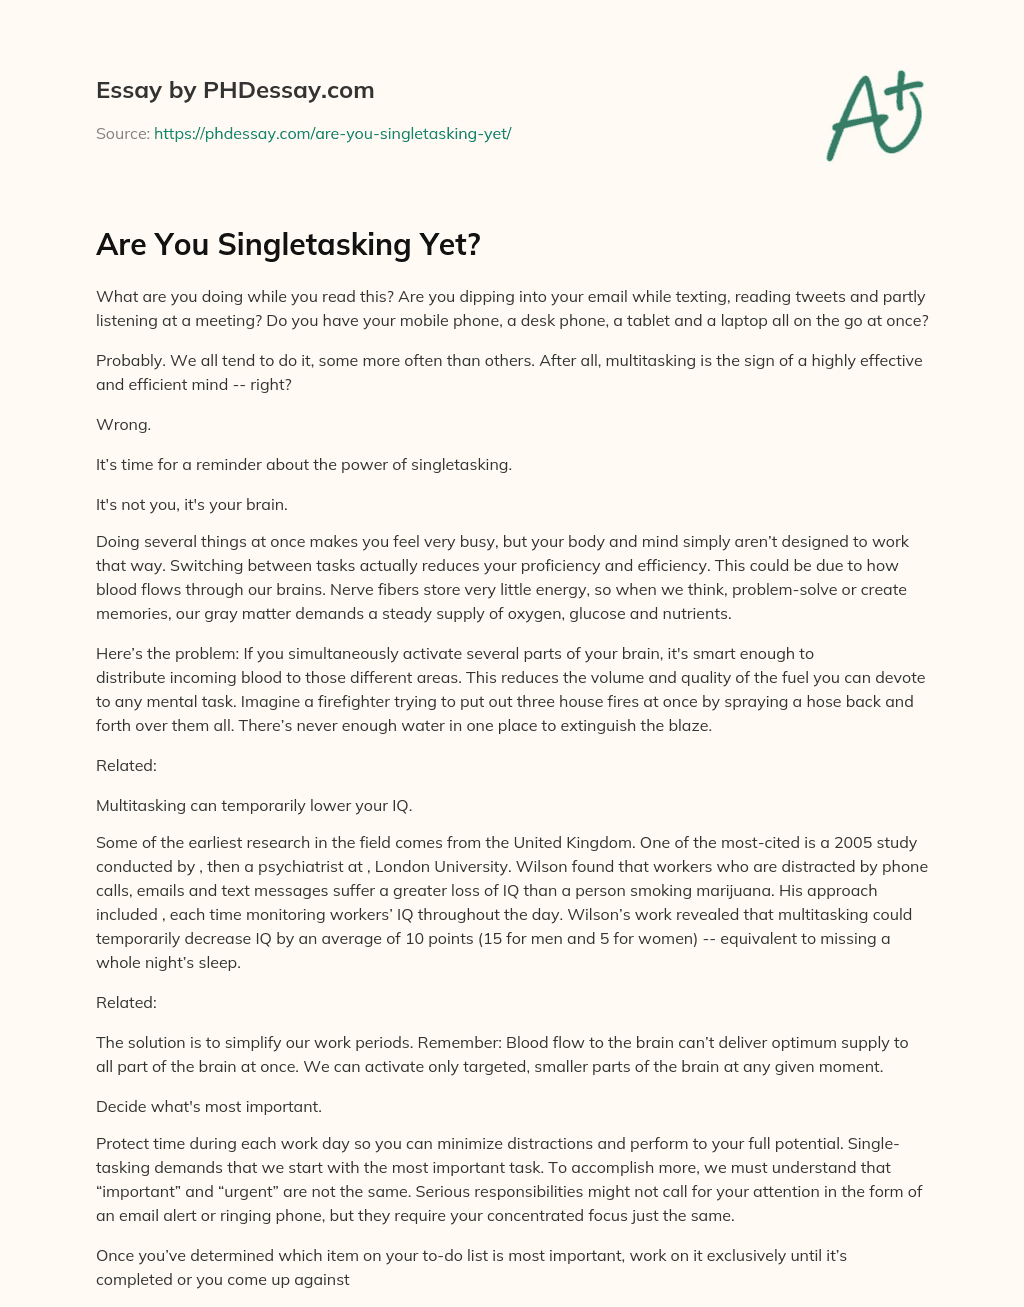 Are You Singletasking Yet? essay